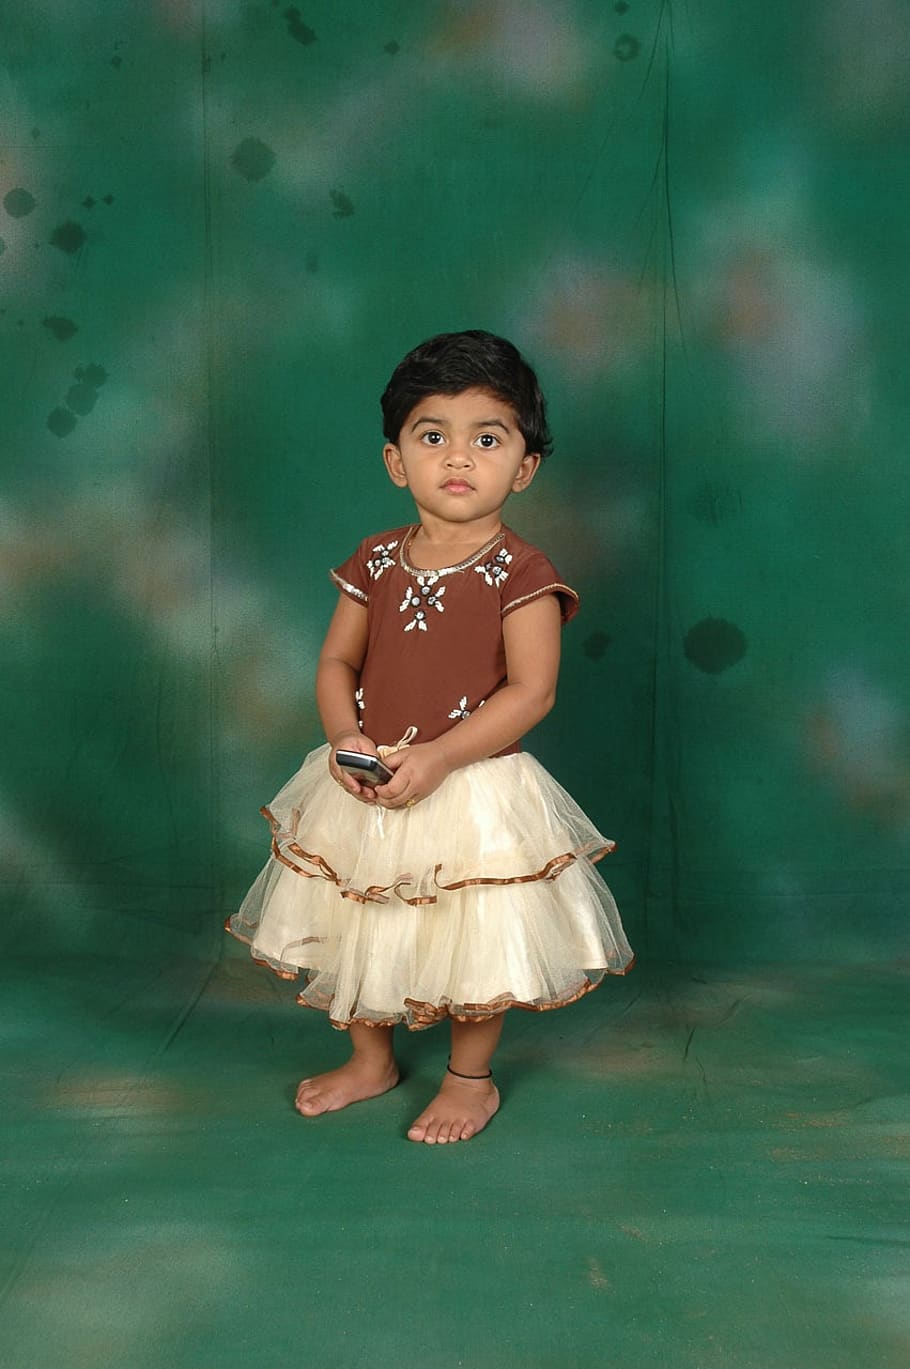 girl, child, cute, green background, standing, kid, childhood